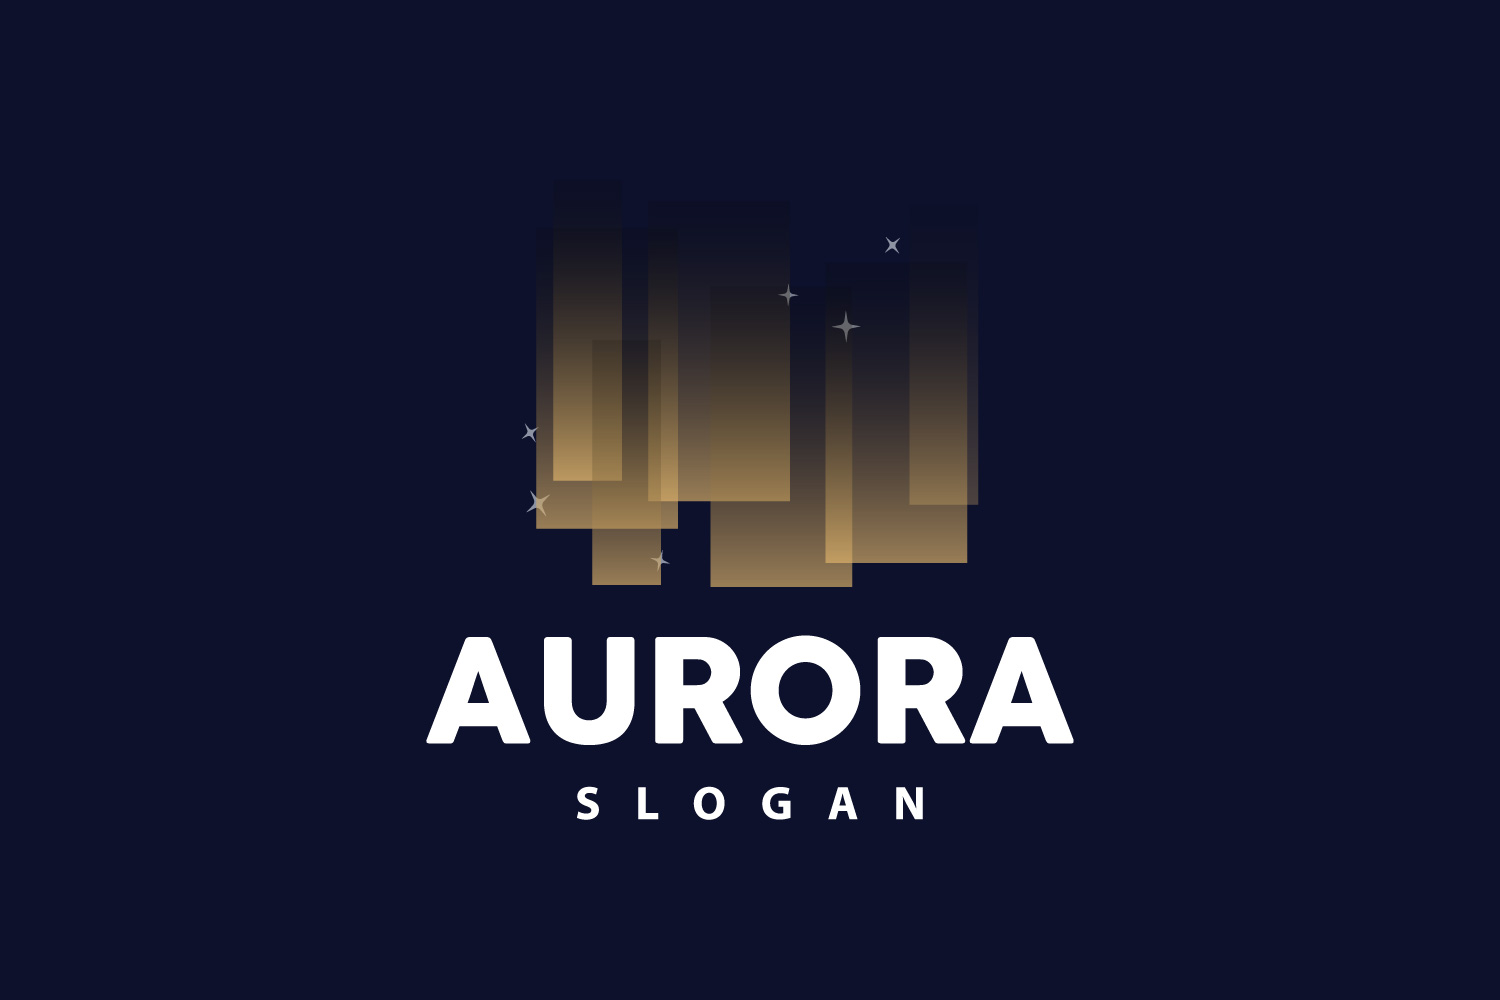 Aurora Light Wave Sky View LogoV6